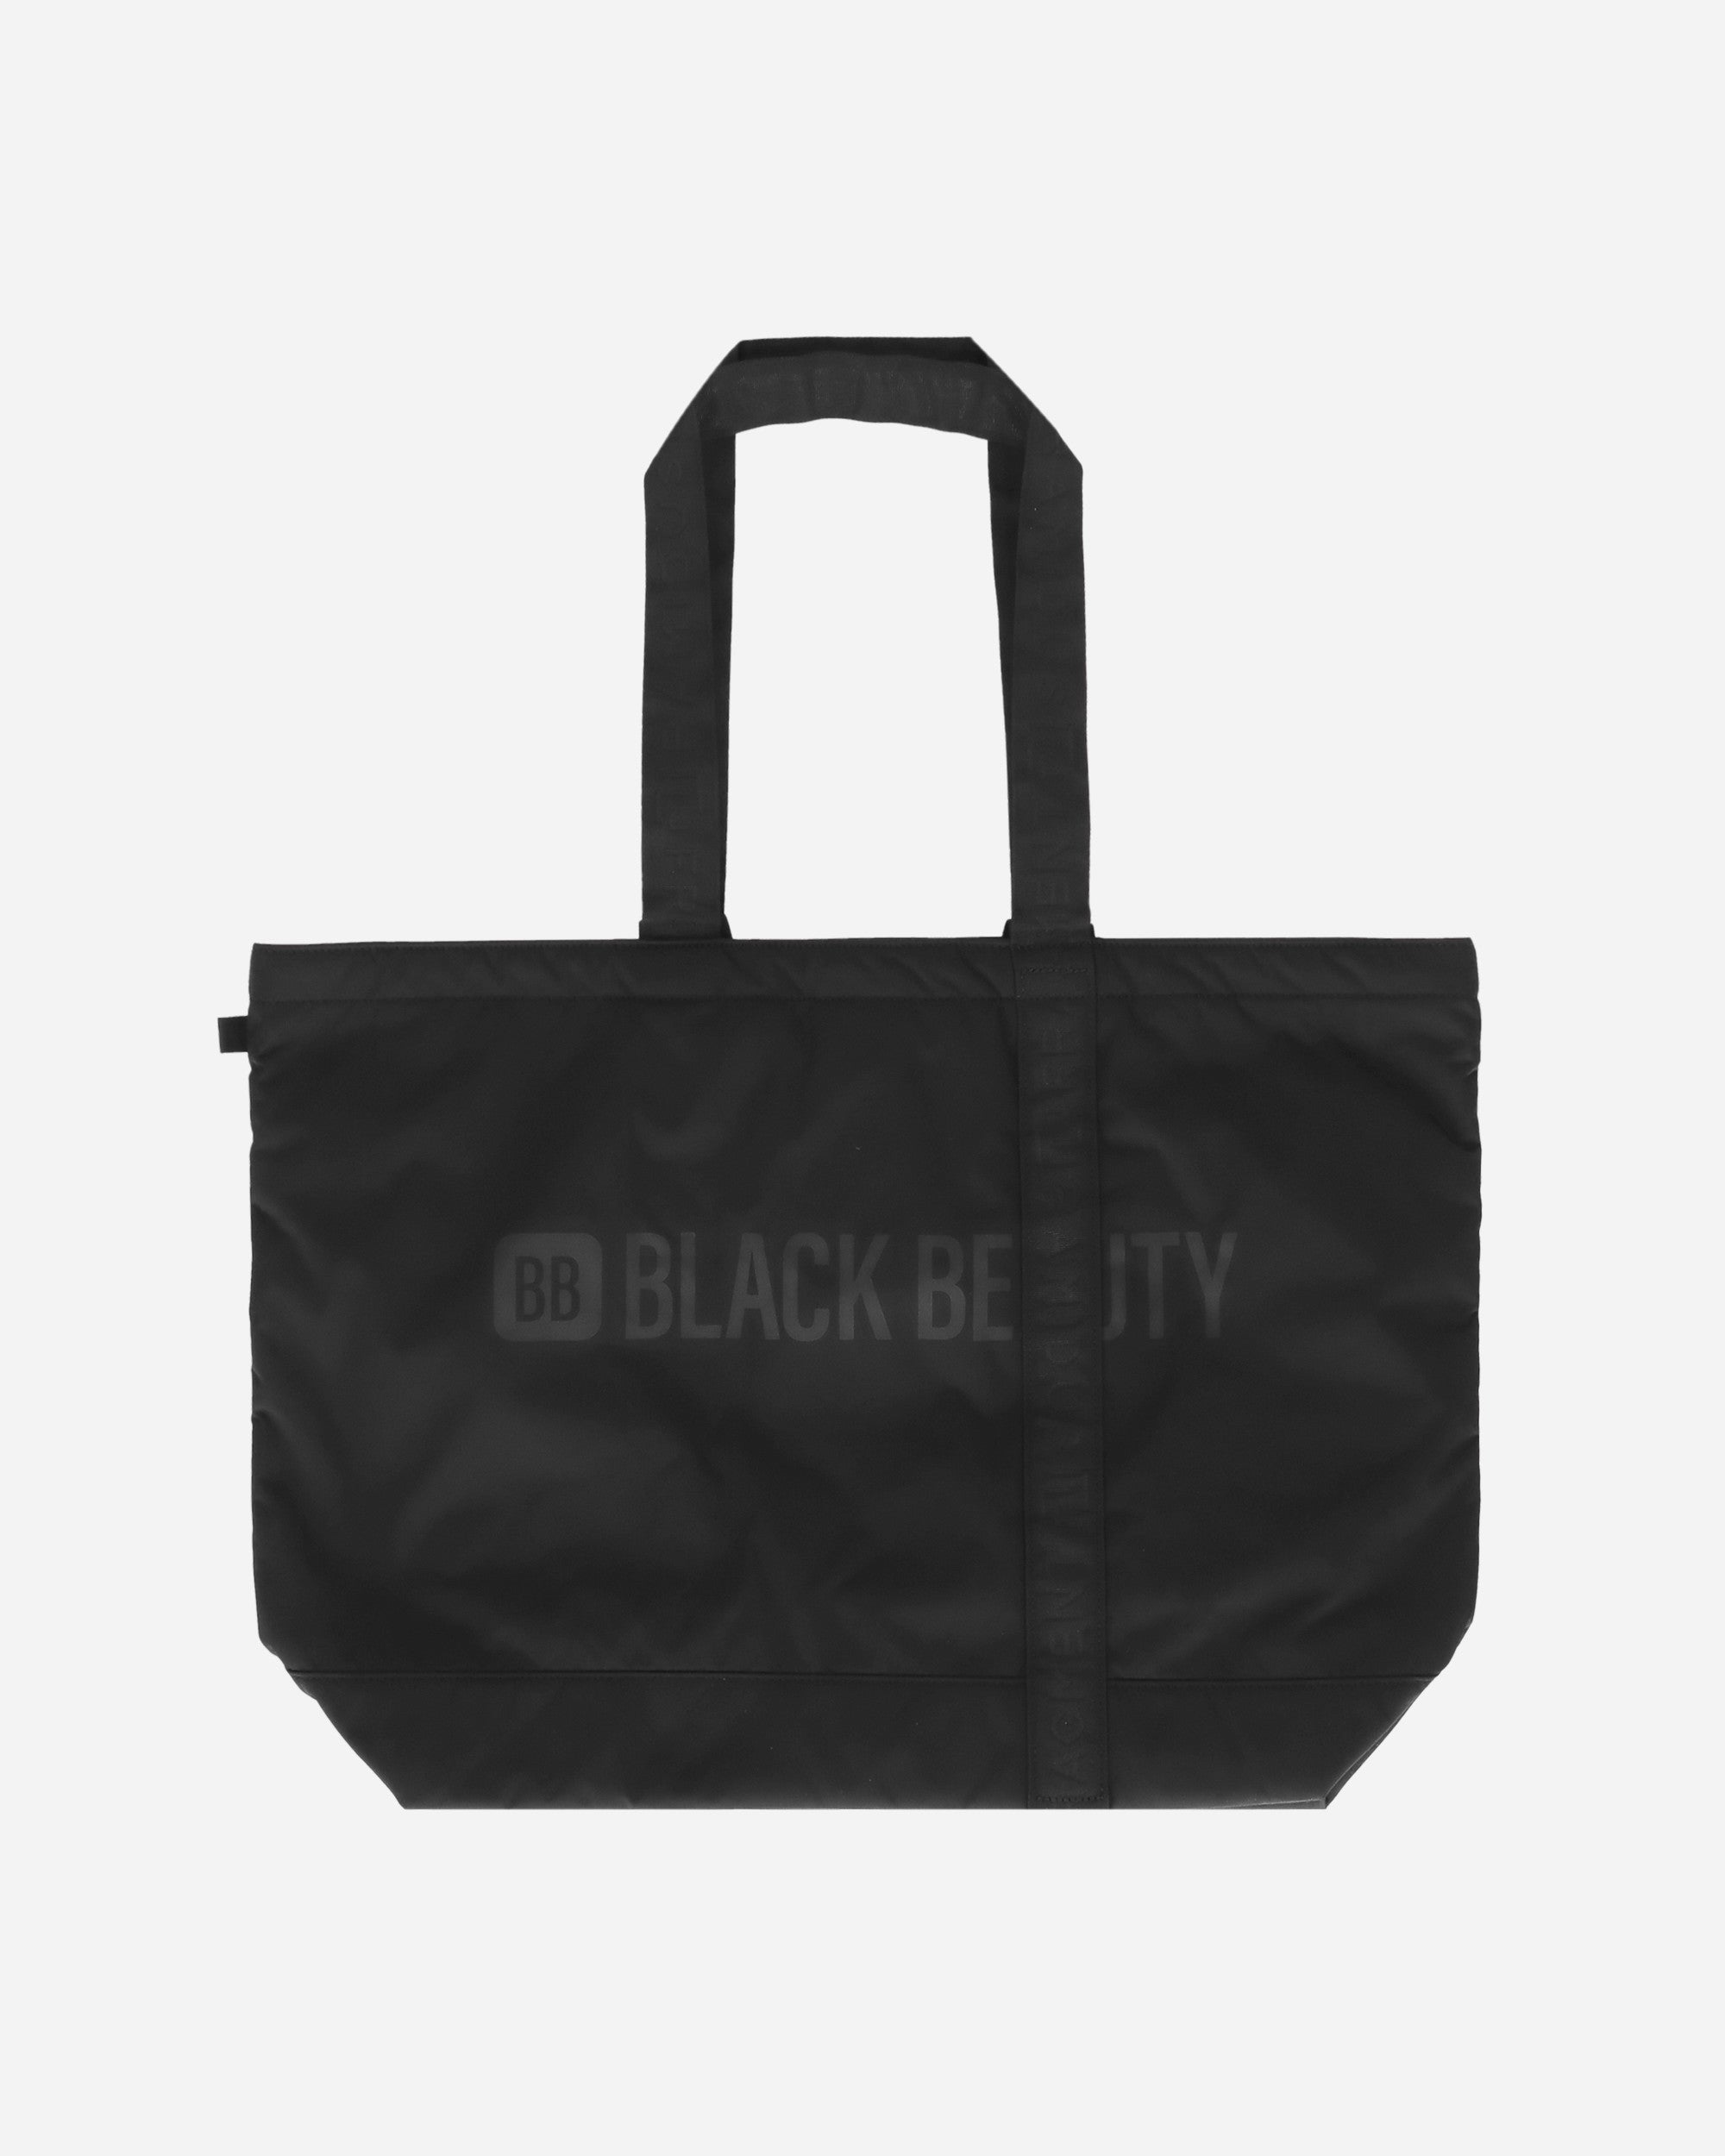 Ramidus fragment design Black Beauty Tote Bag (L) Black